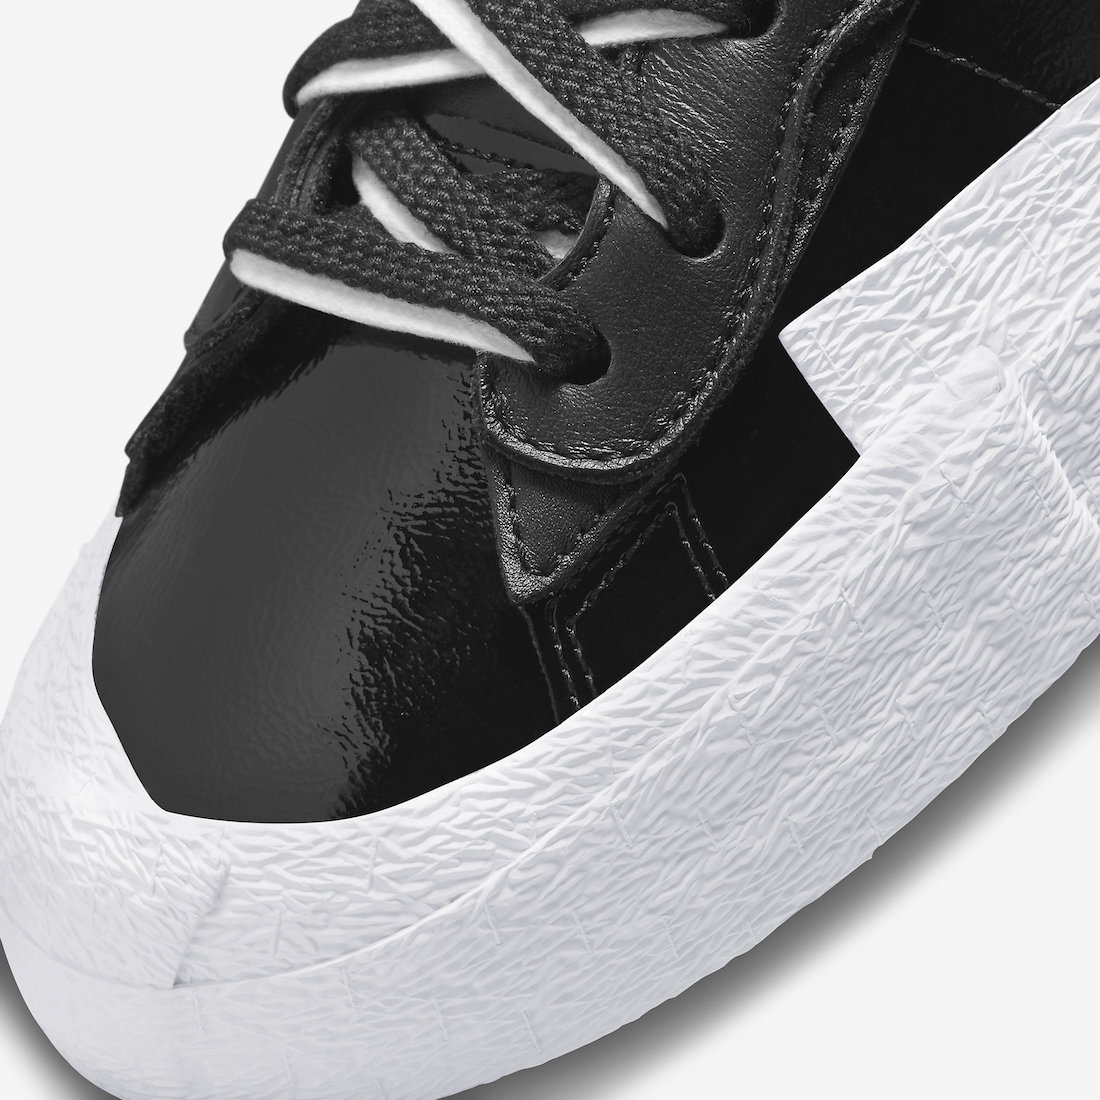 Sacai Nike Blazer Low Black Patent DM6443-001 Release Date